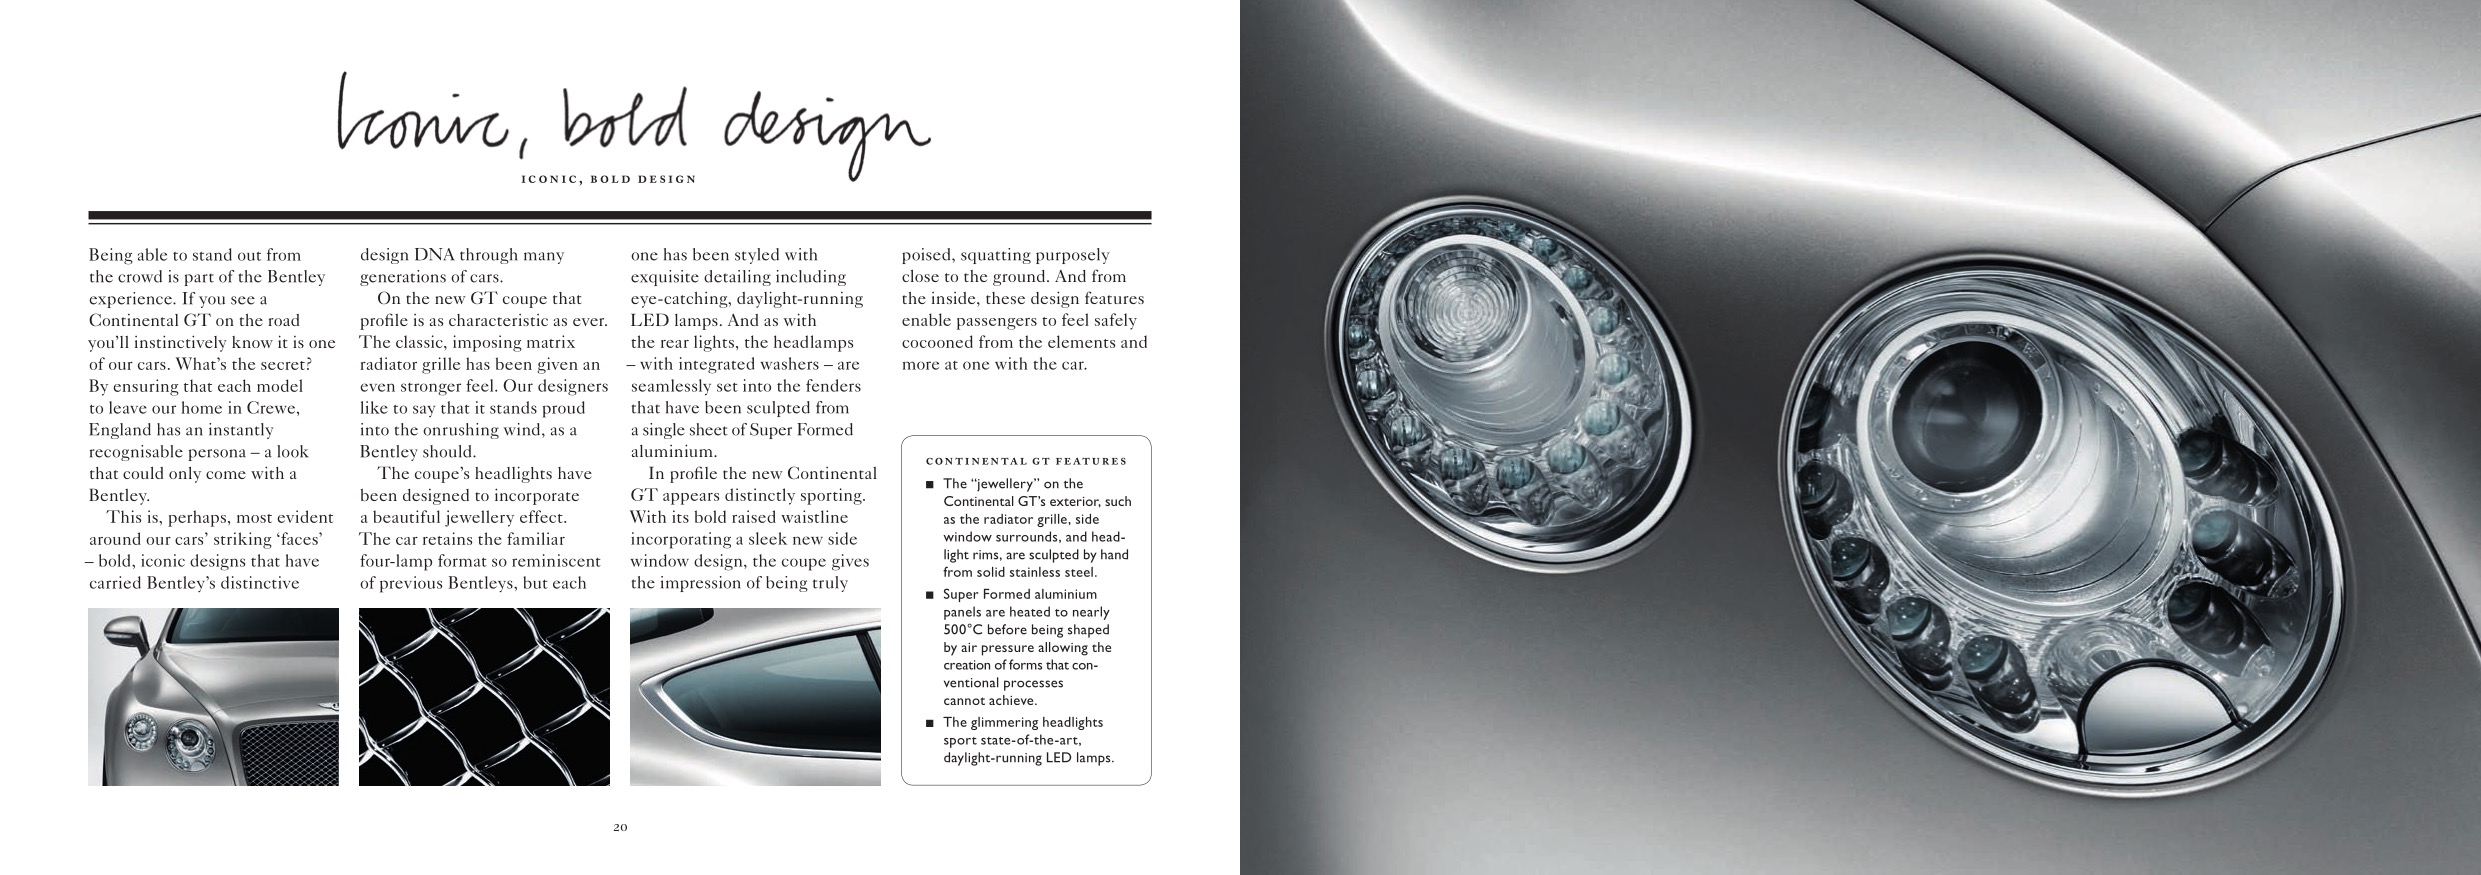 2011 Bentley Continental GT Brochure Page 21